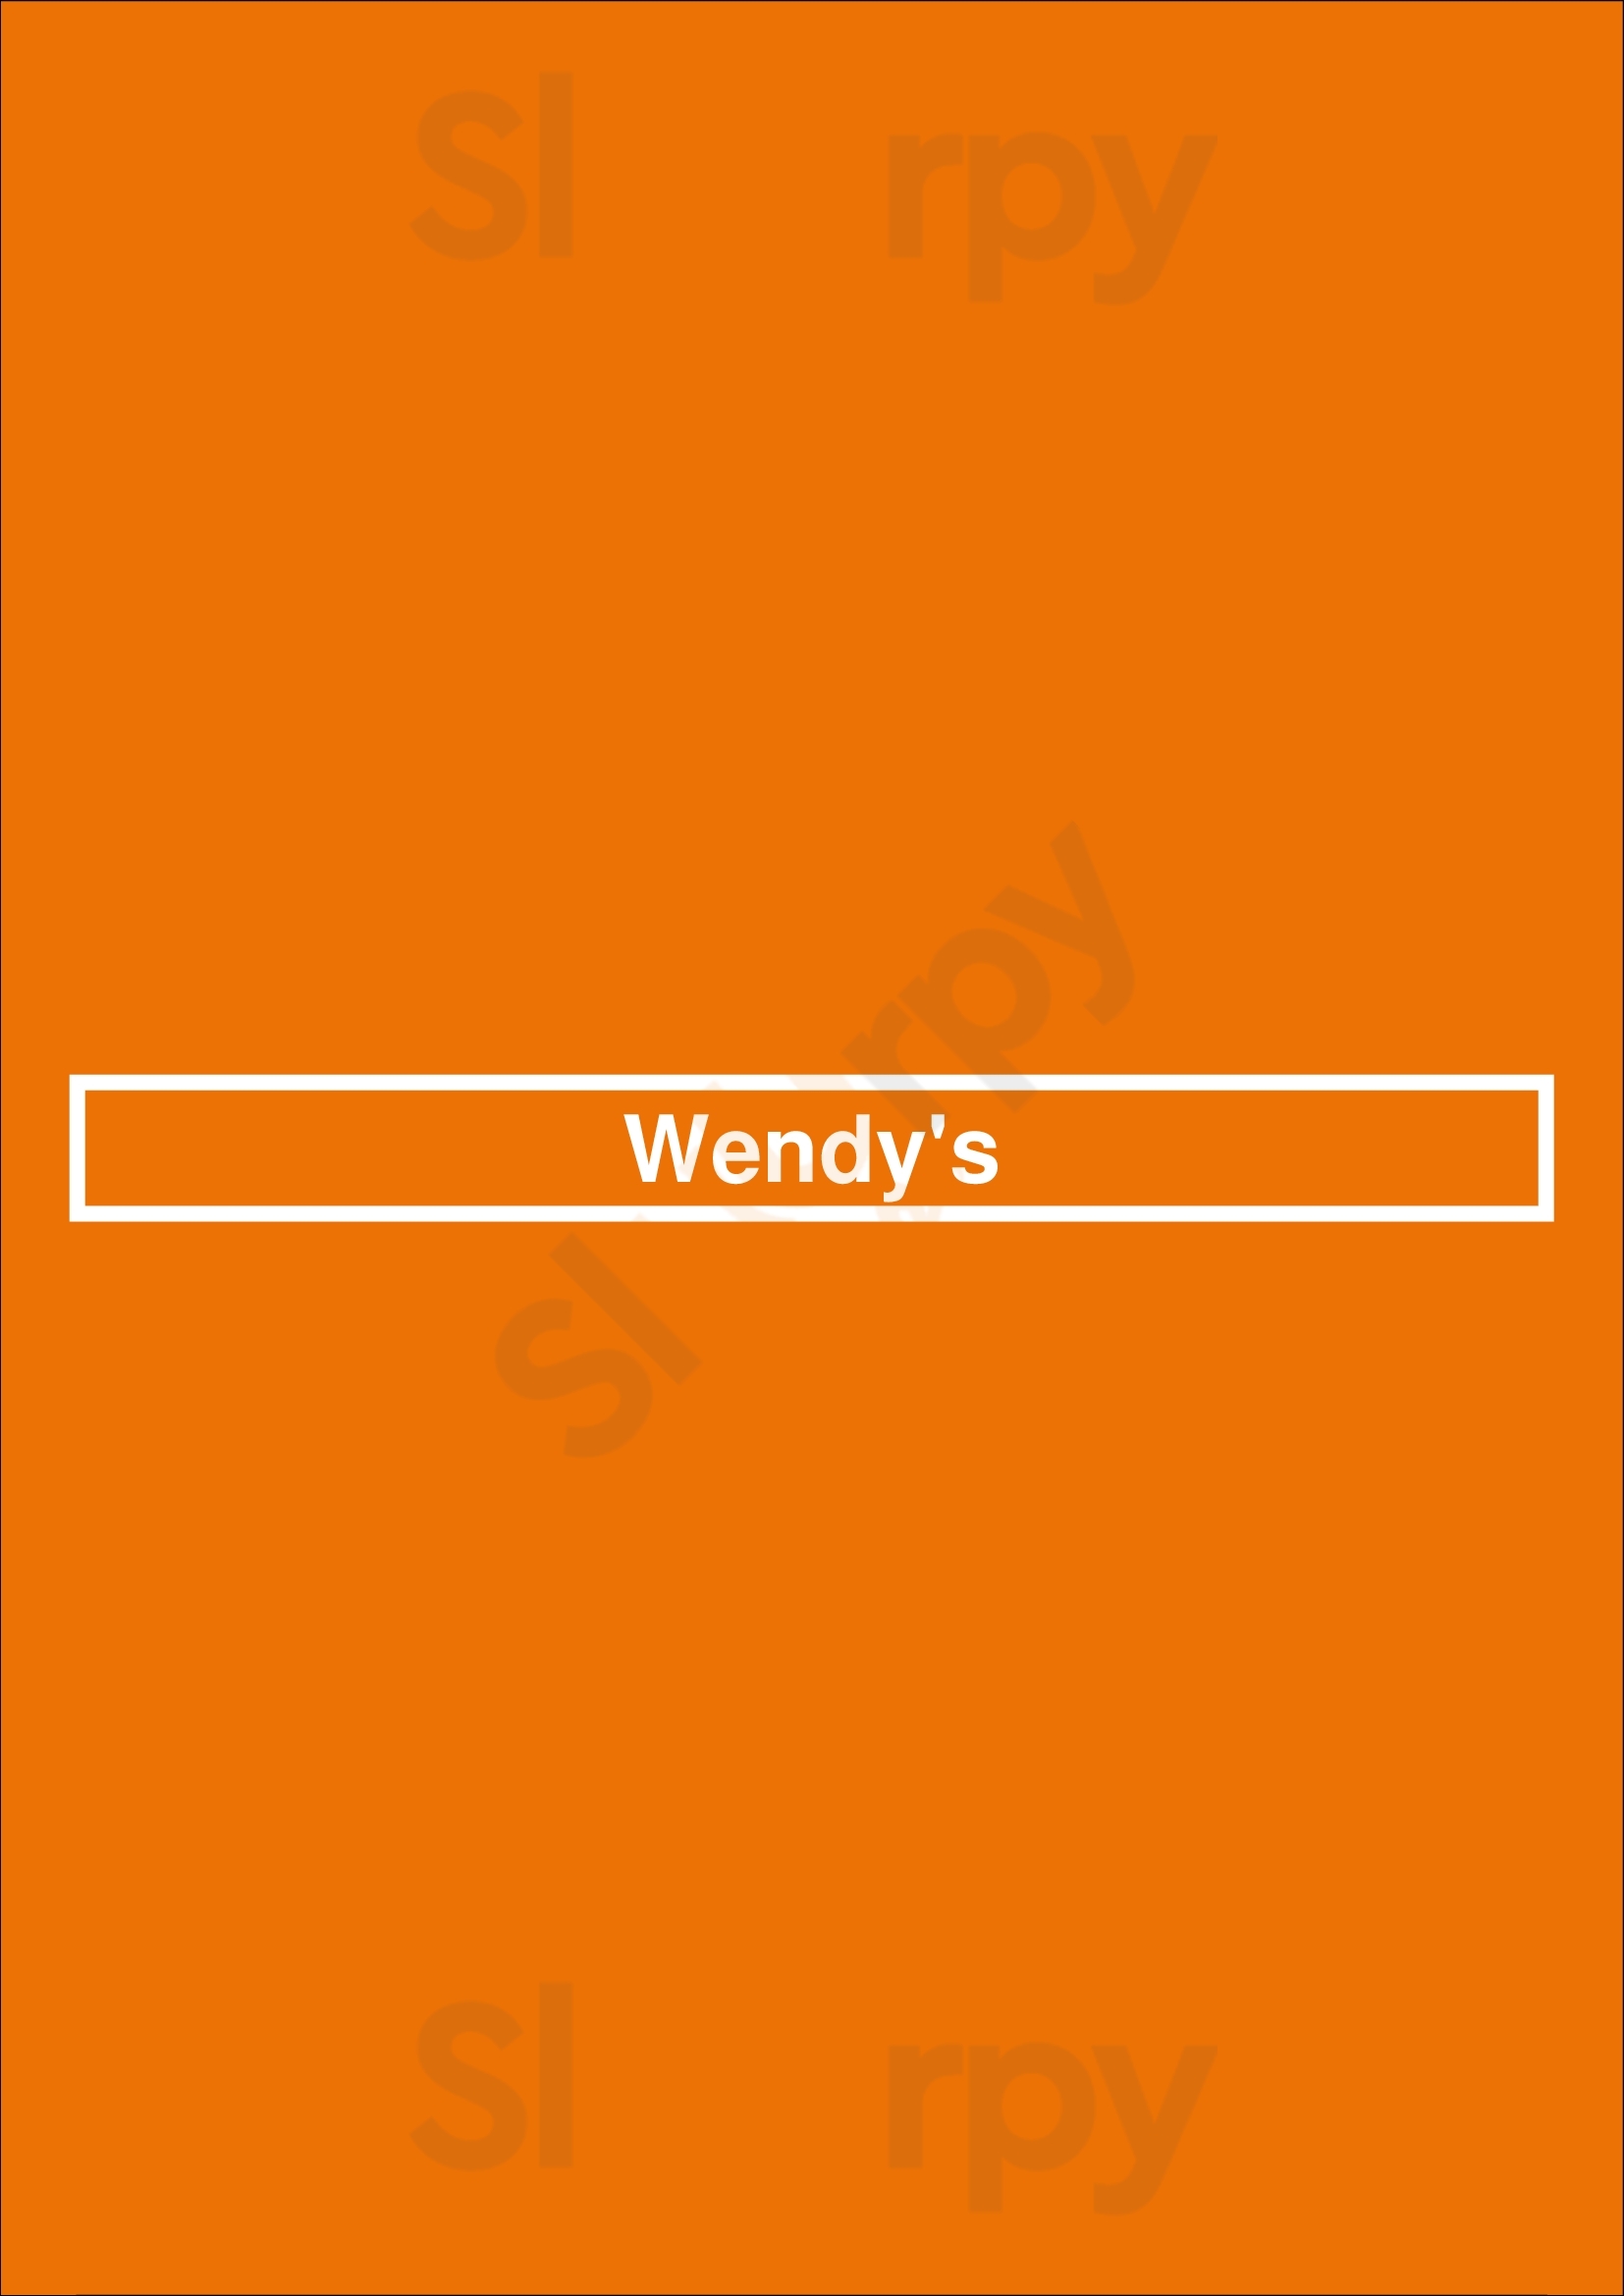 Wendy's Lompoc Menu - 1